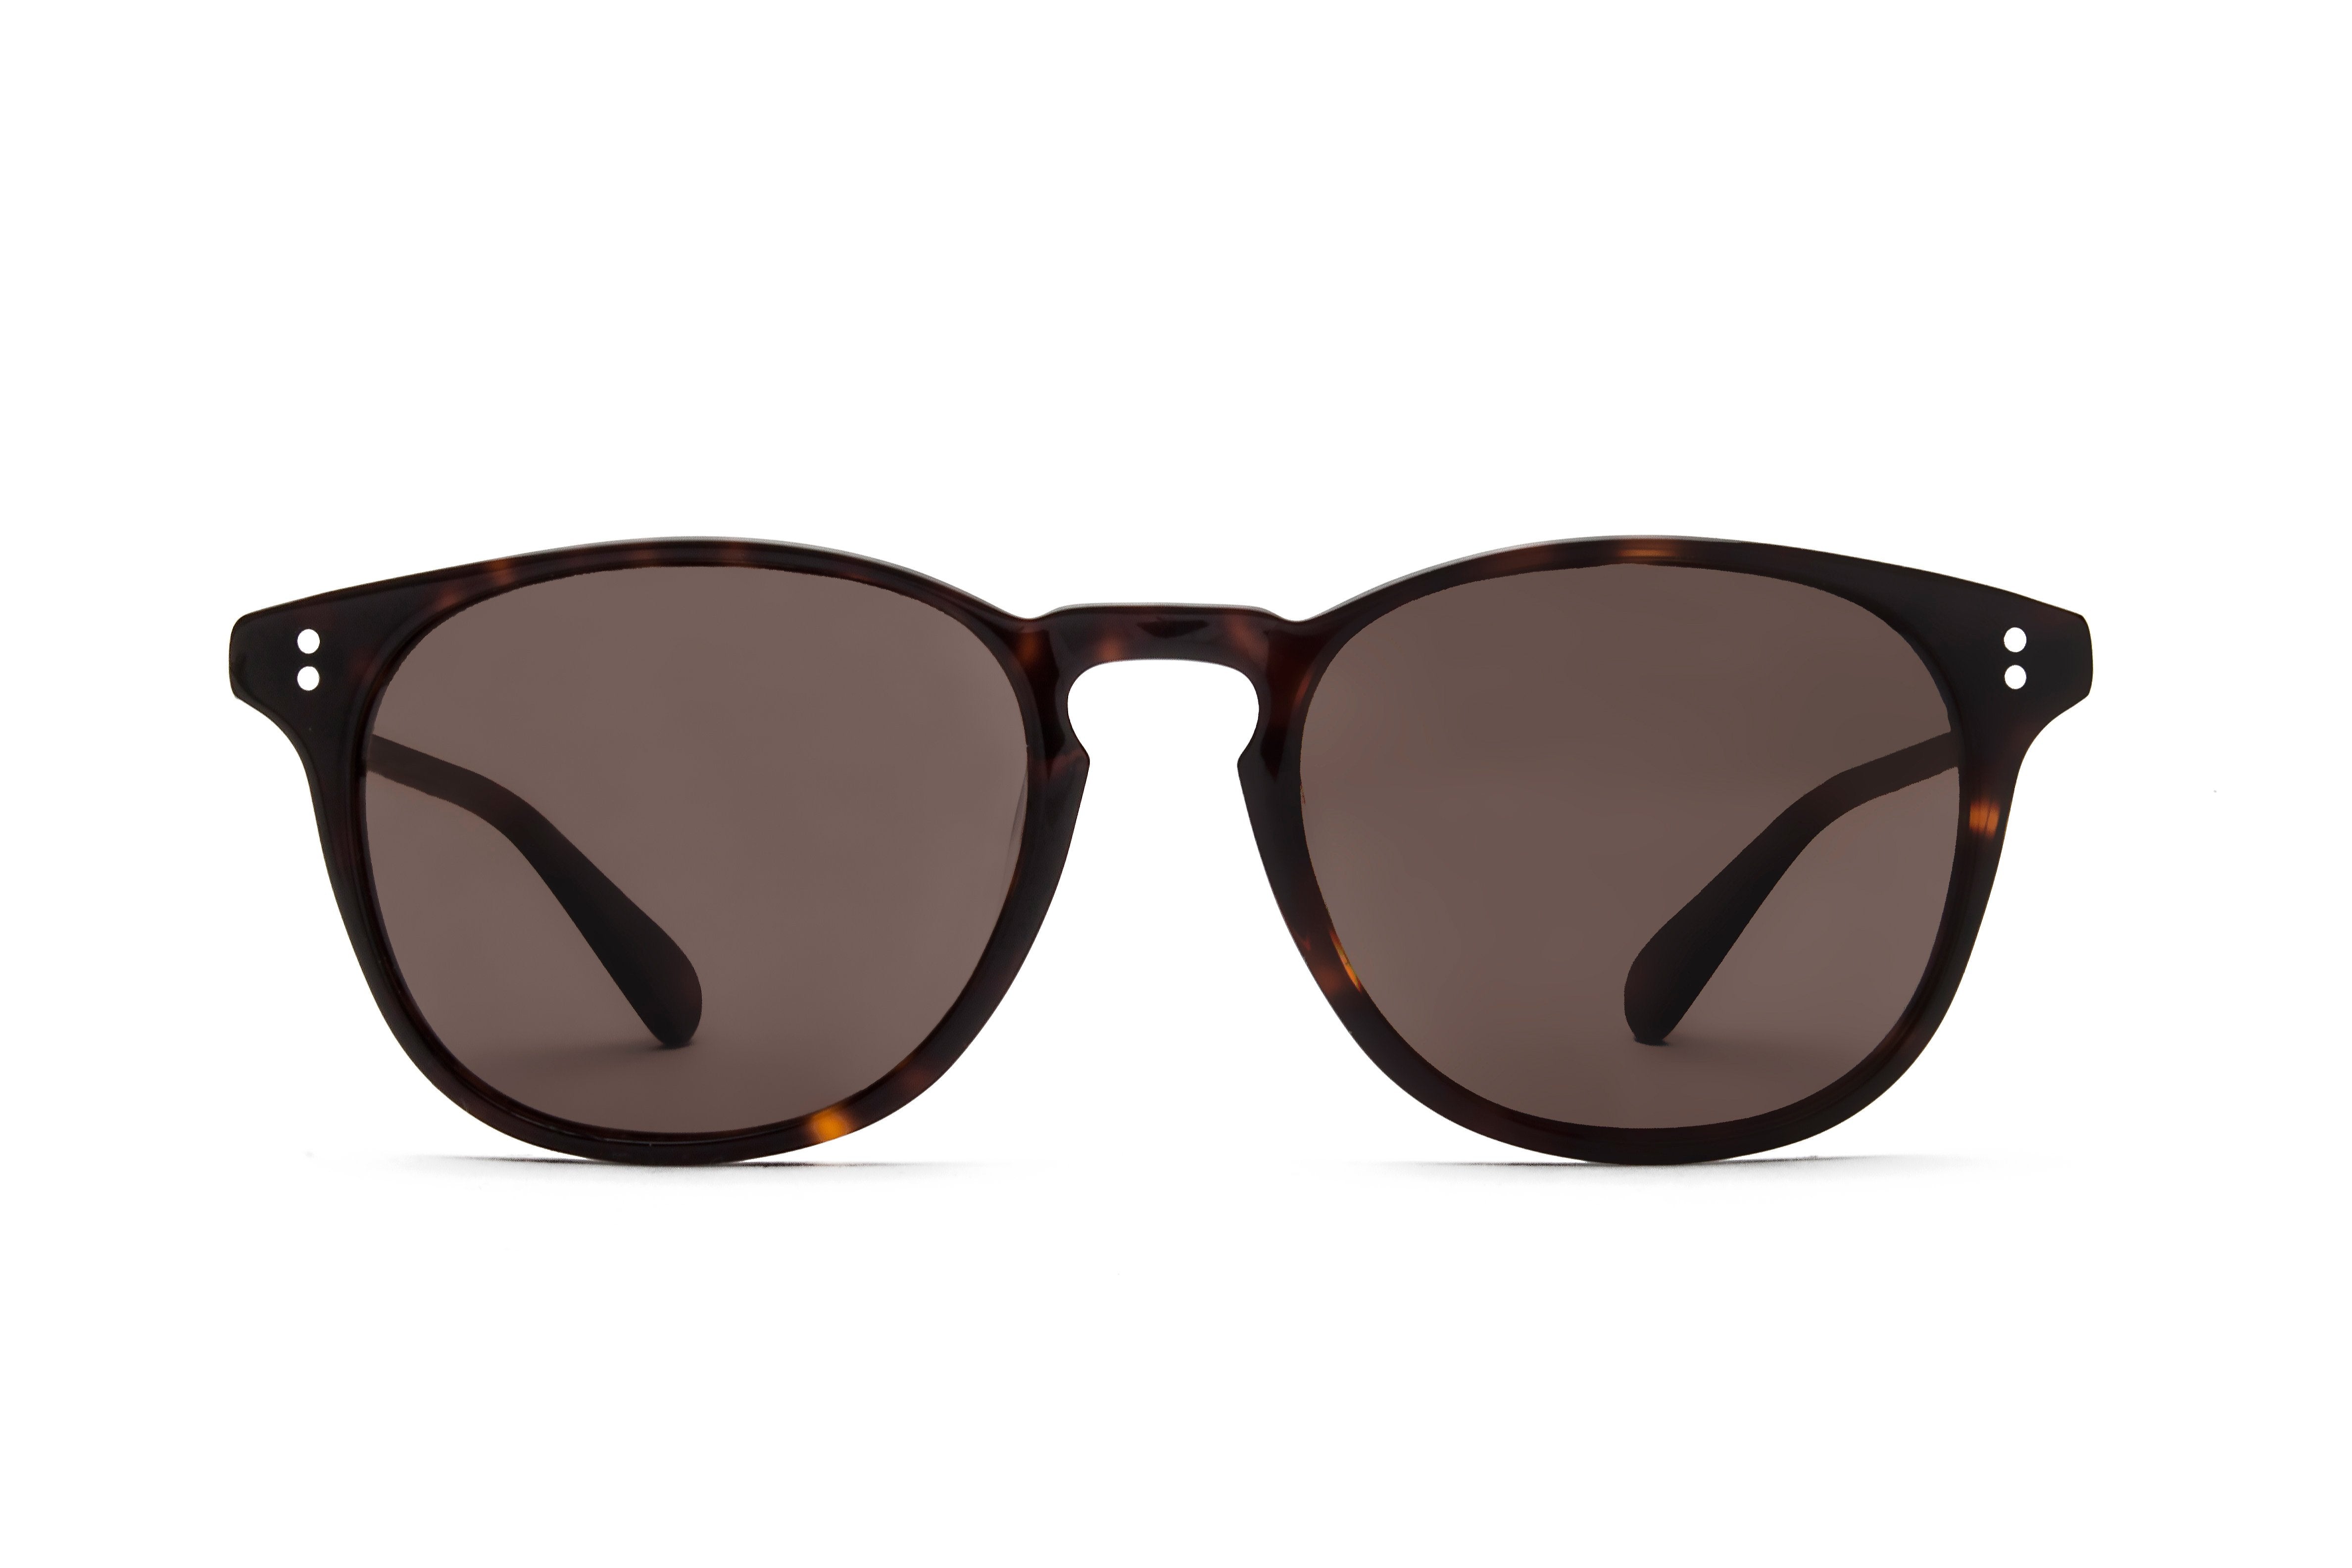 All Sunglasses – The Rocket Eyewear Company